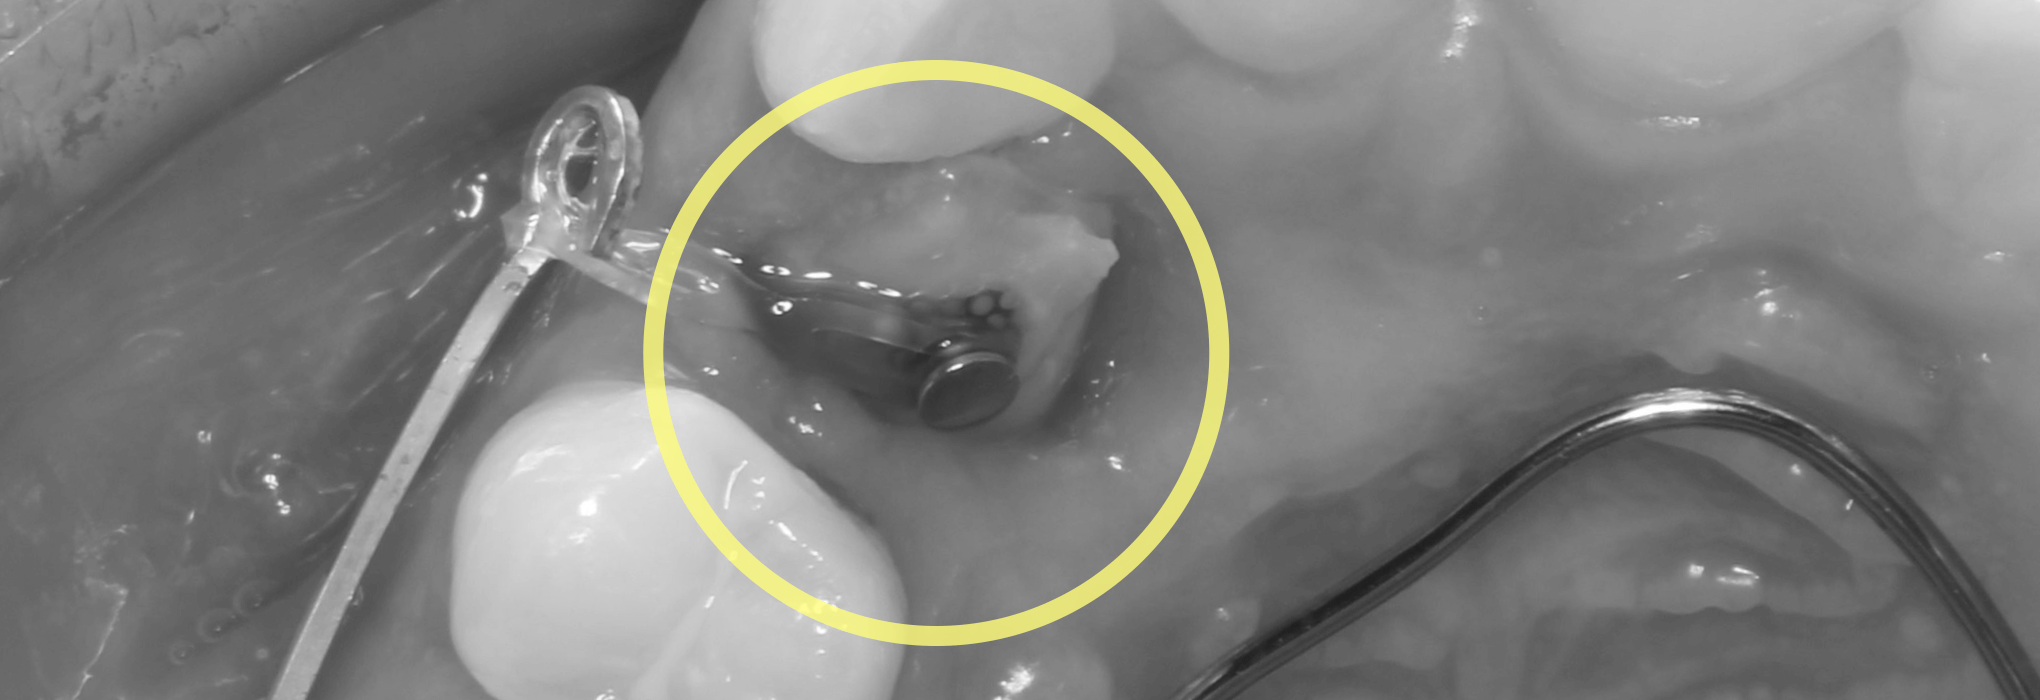 埋伏歯の矯正治療